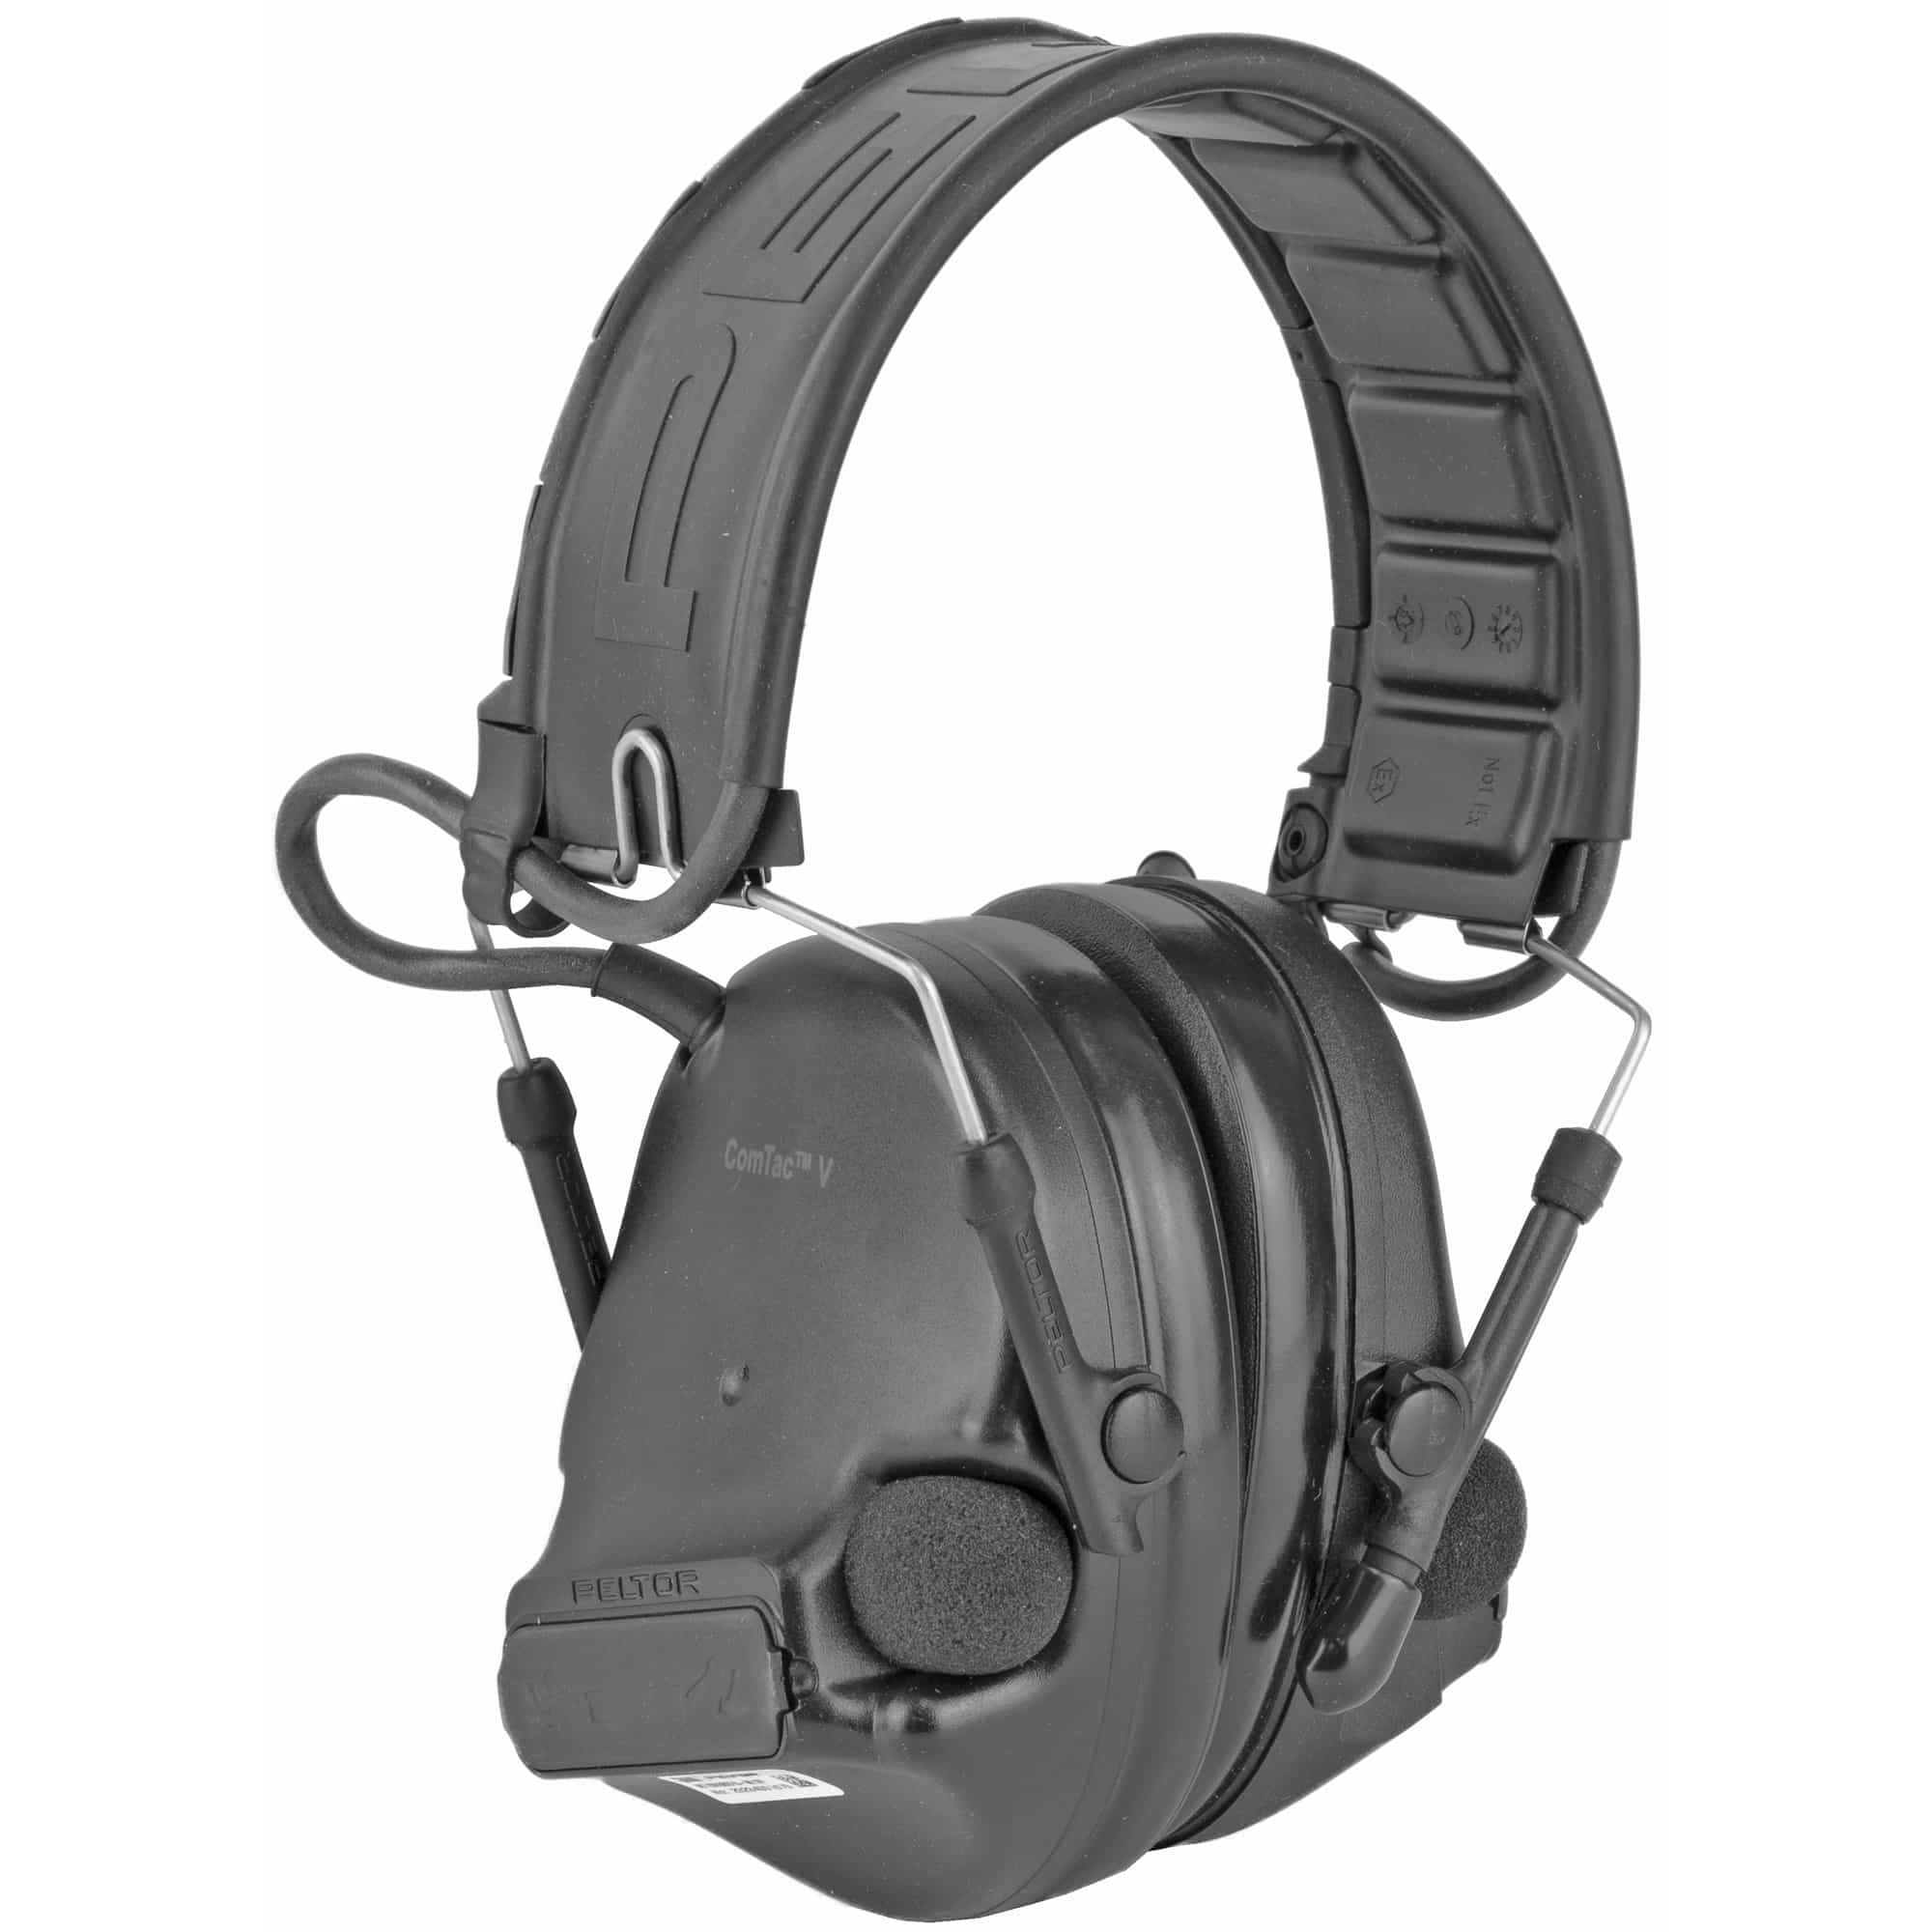 https://cityarsenal.com/product/peltor-comtac-v-hd-a-band-sv-electronic-earmuff-headband-foldable-black-mt20h682fb-09-sv/